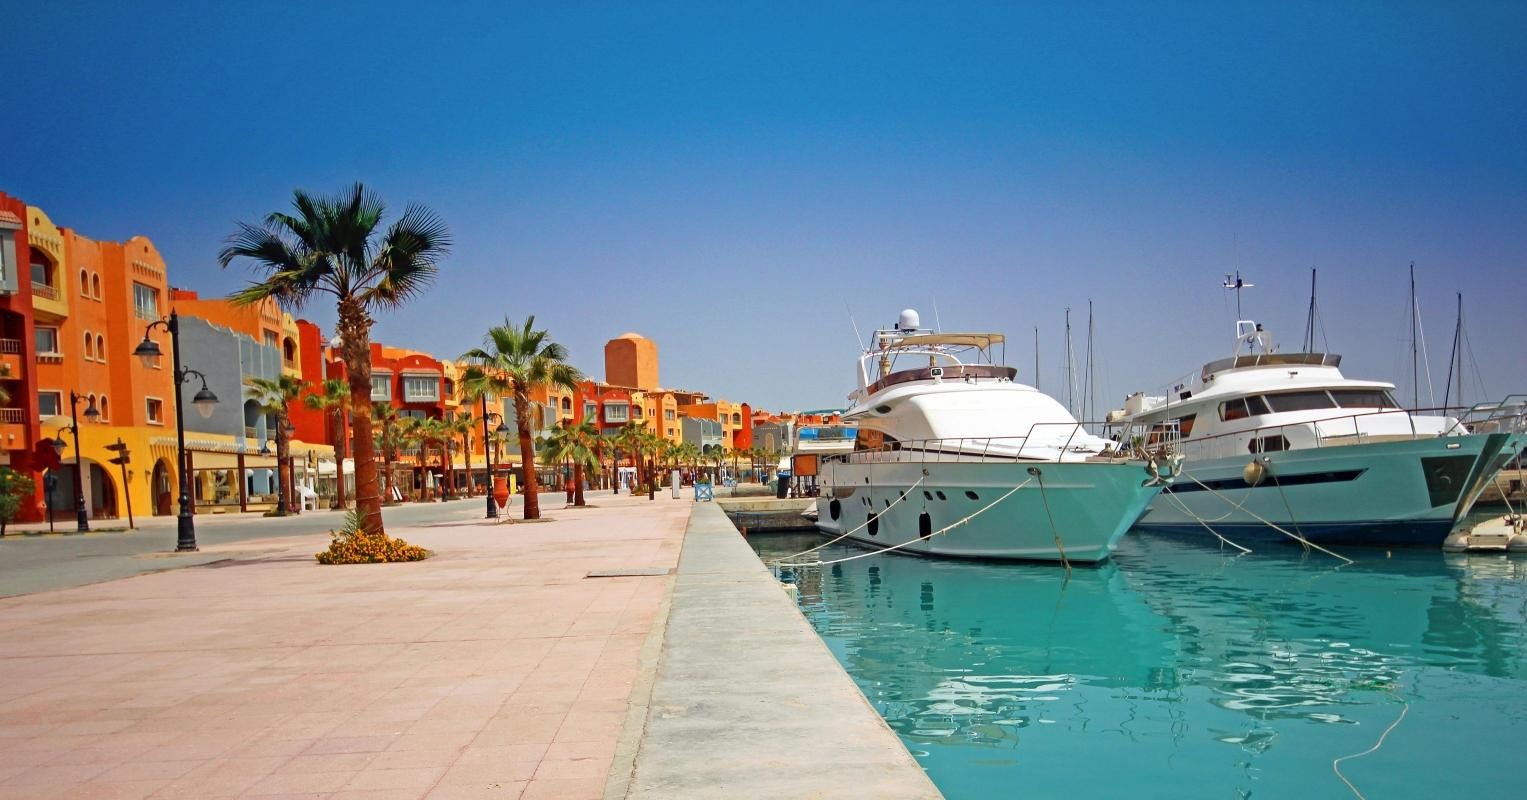 Hurghada shore excursions